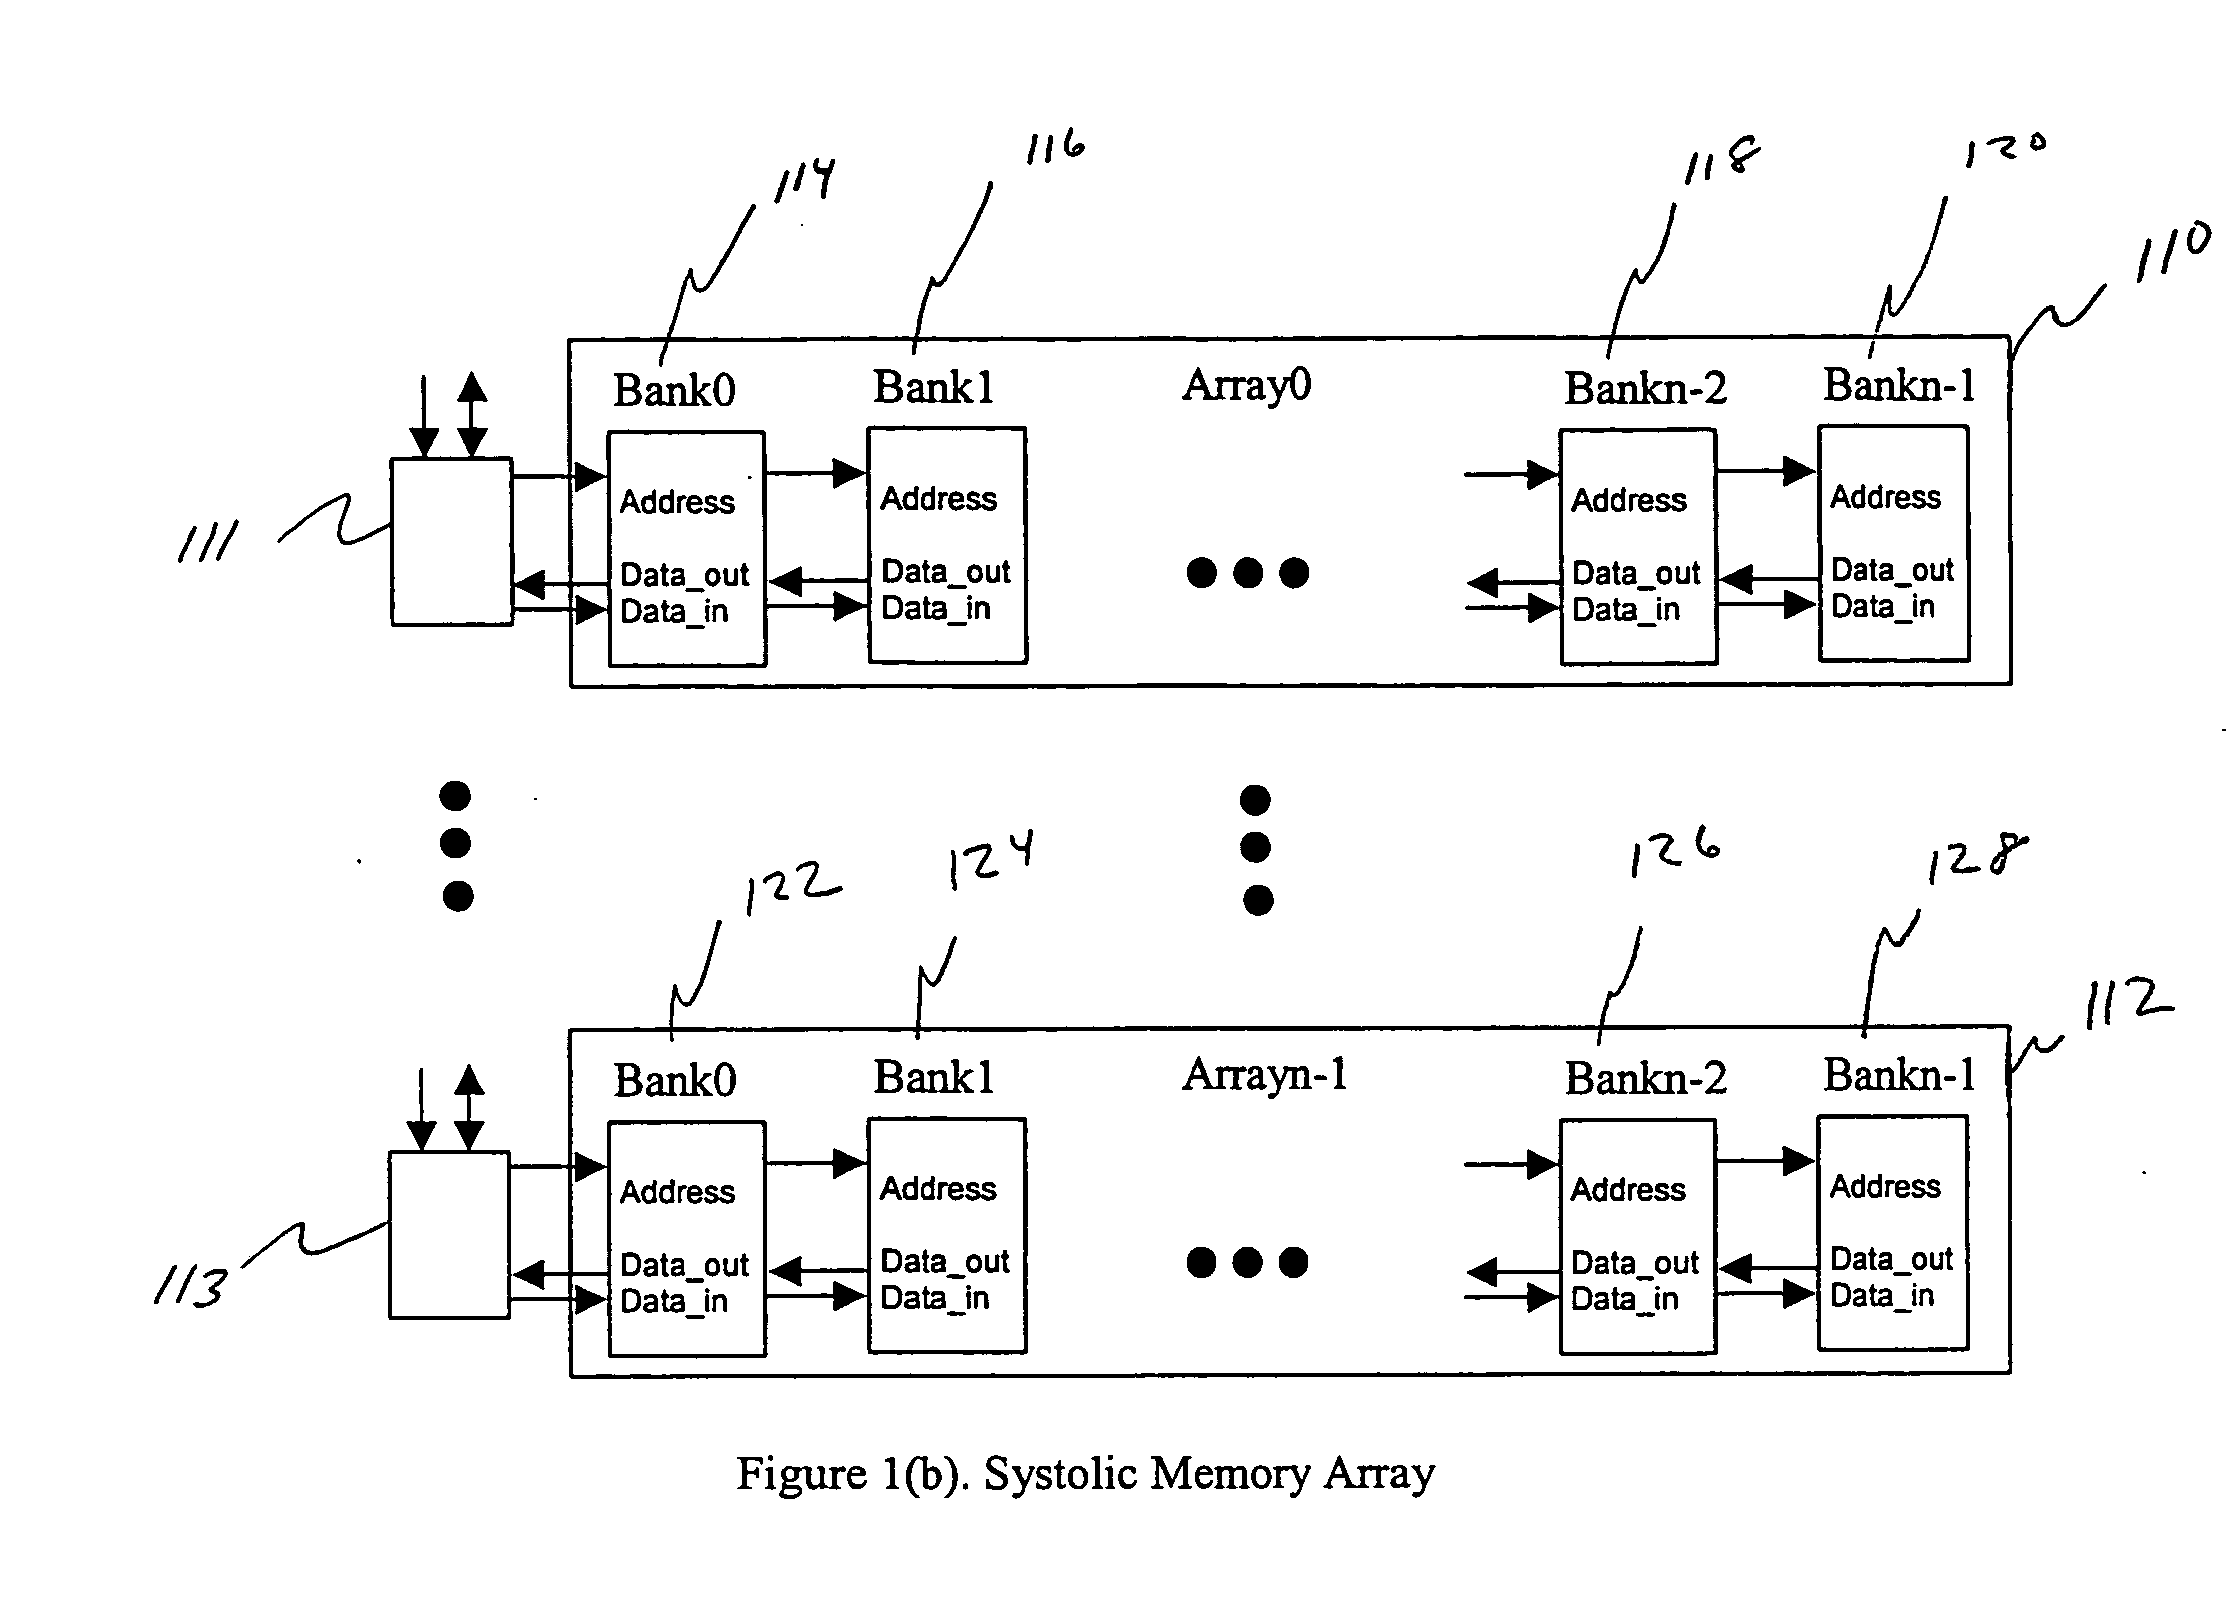 Systolic memory arrays